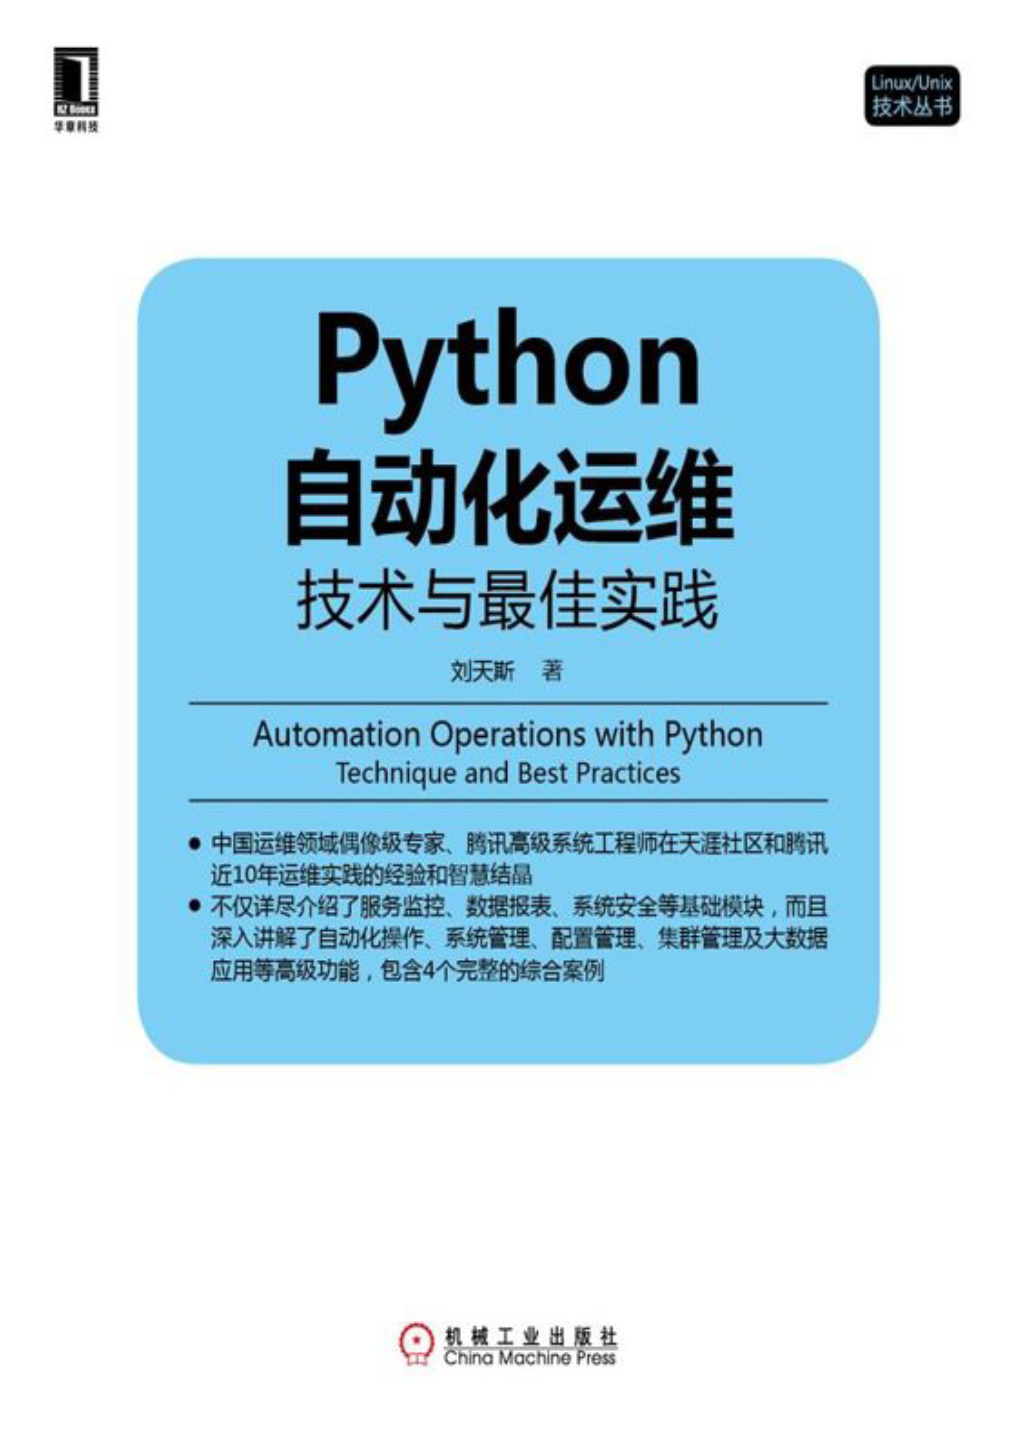 Python自动化运维：技术与最佳实践(Linux/Unix技术丛书)